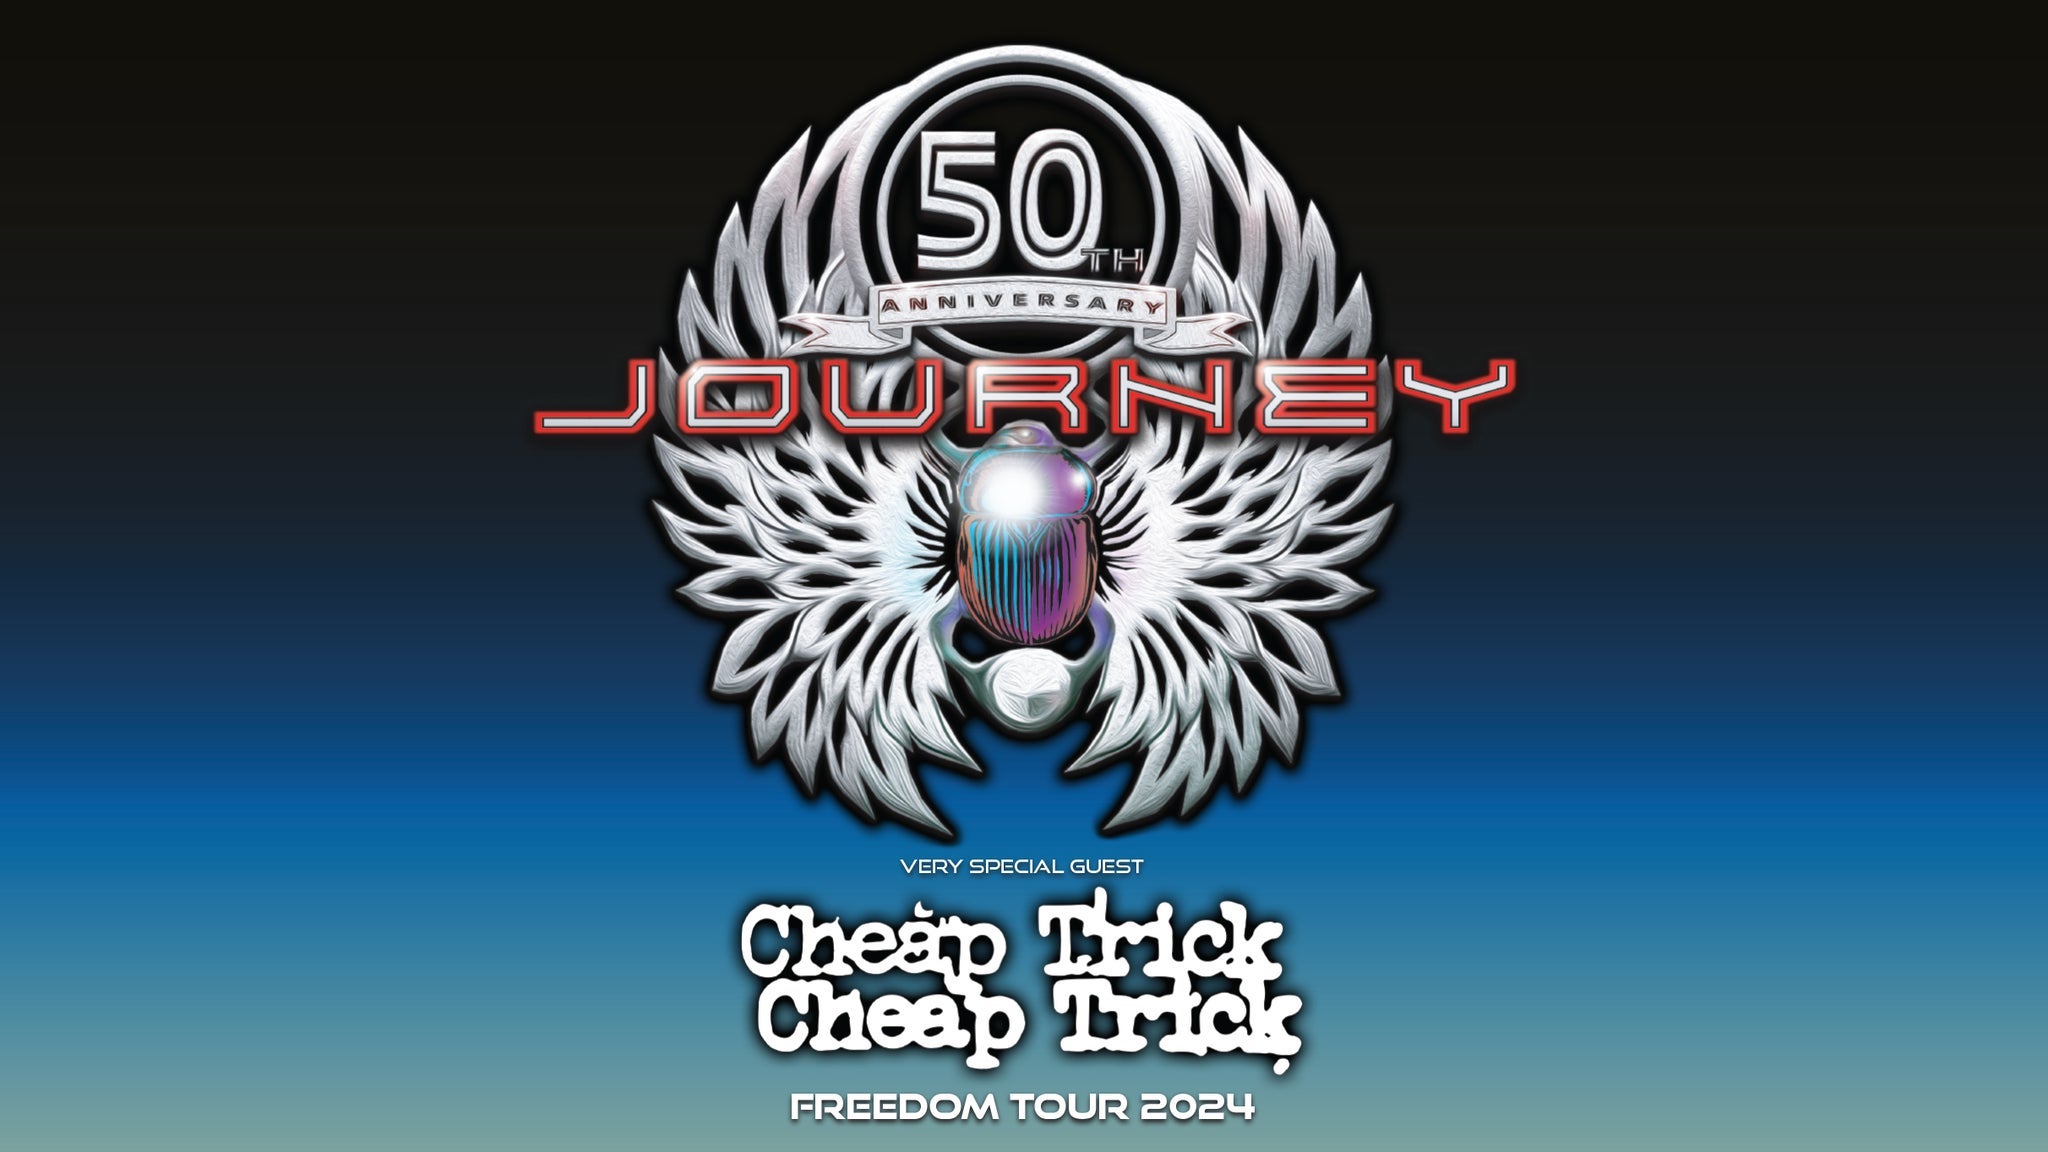 Journey & Cheap Trick